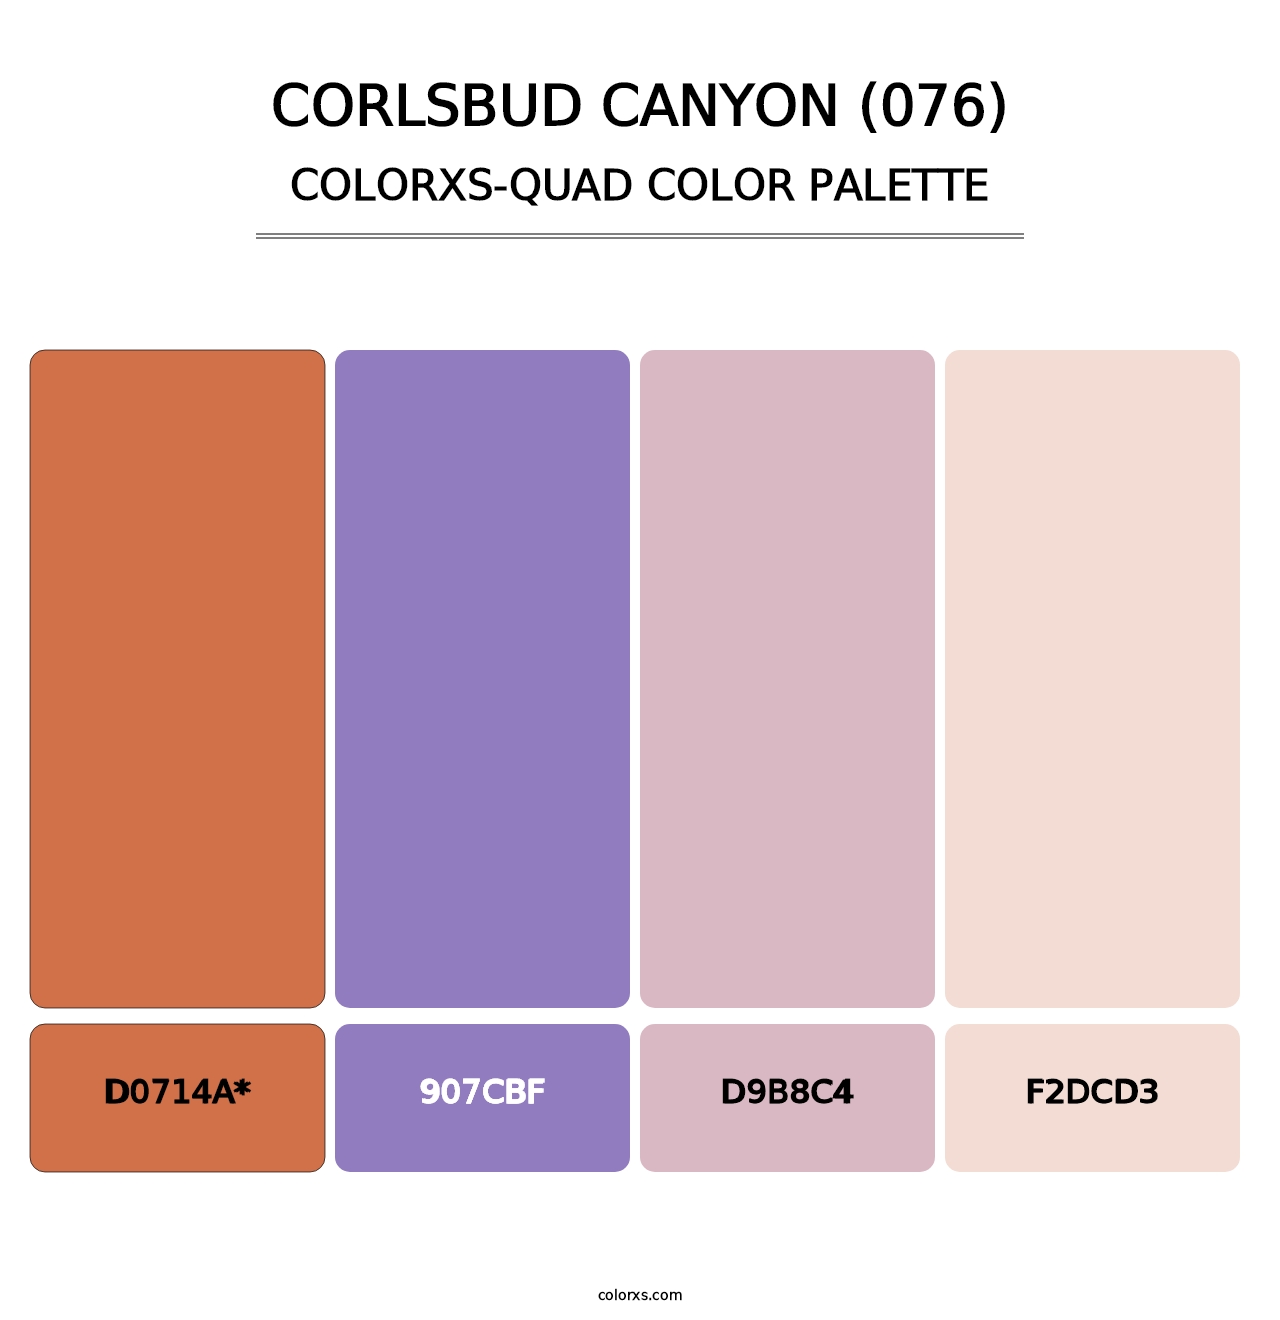 Corlsbud Canyon (076) - Colorxs Quad Palette